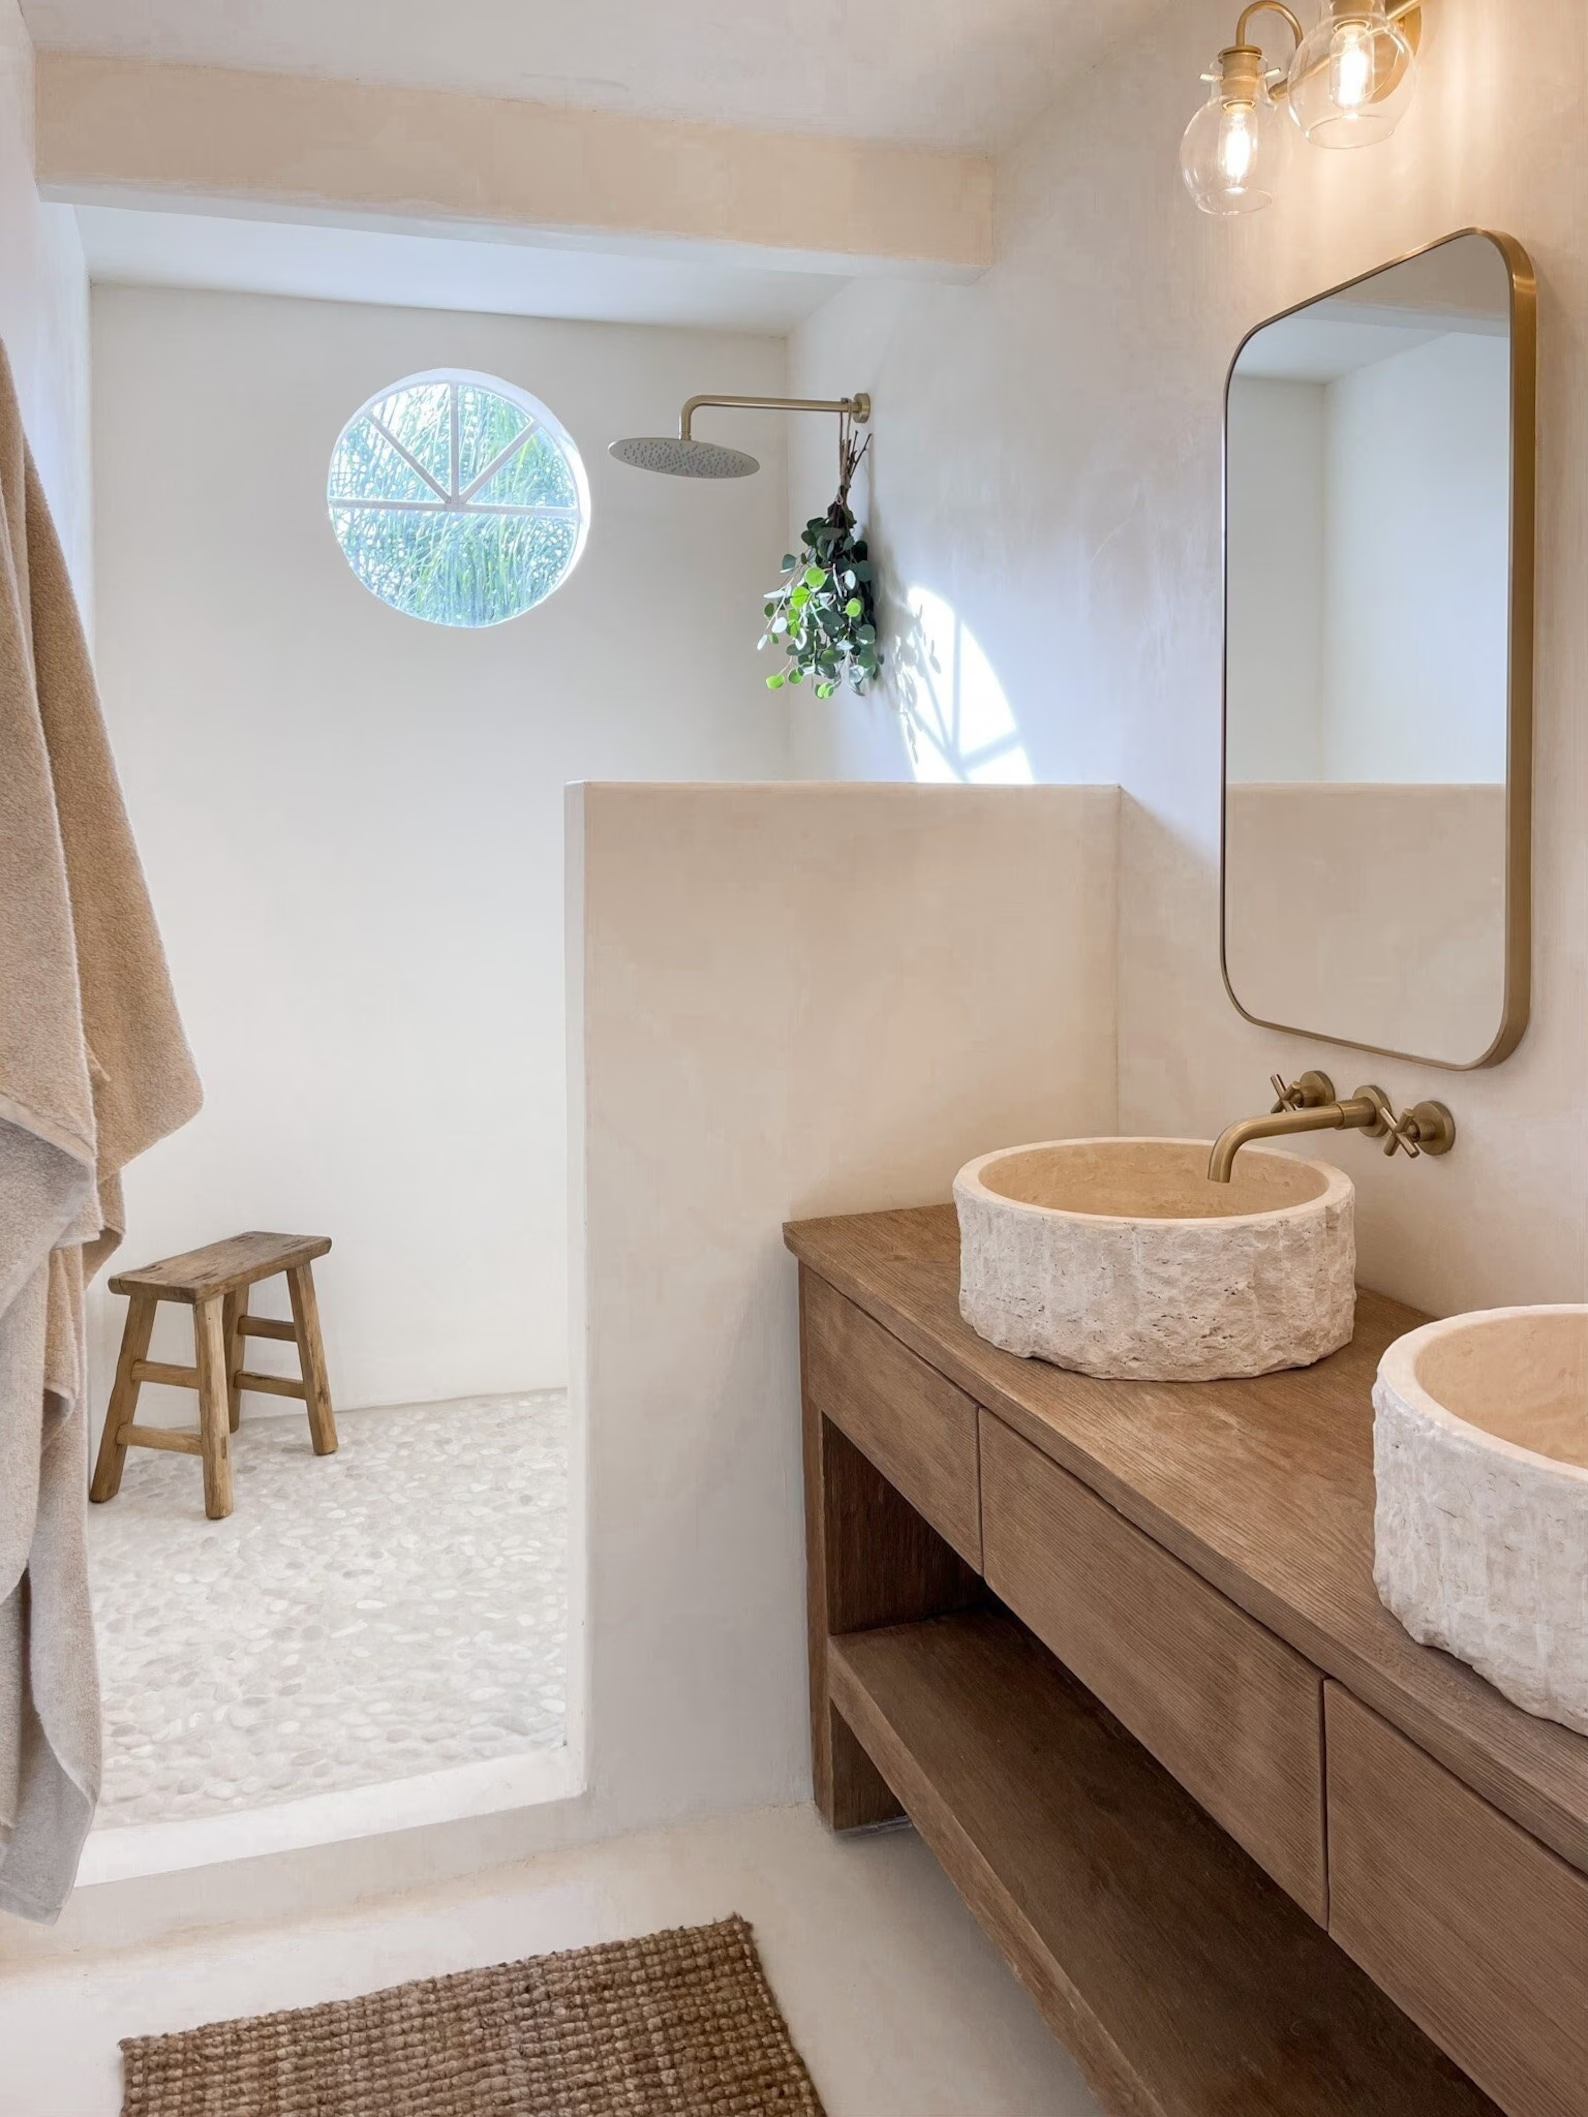 Bathroom Luxury: Enhancing Your Space with Bathroom Vanities